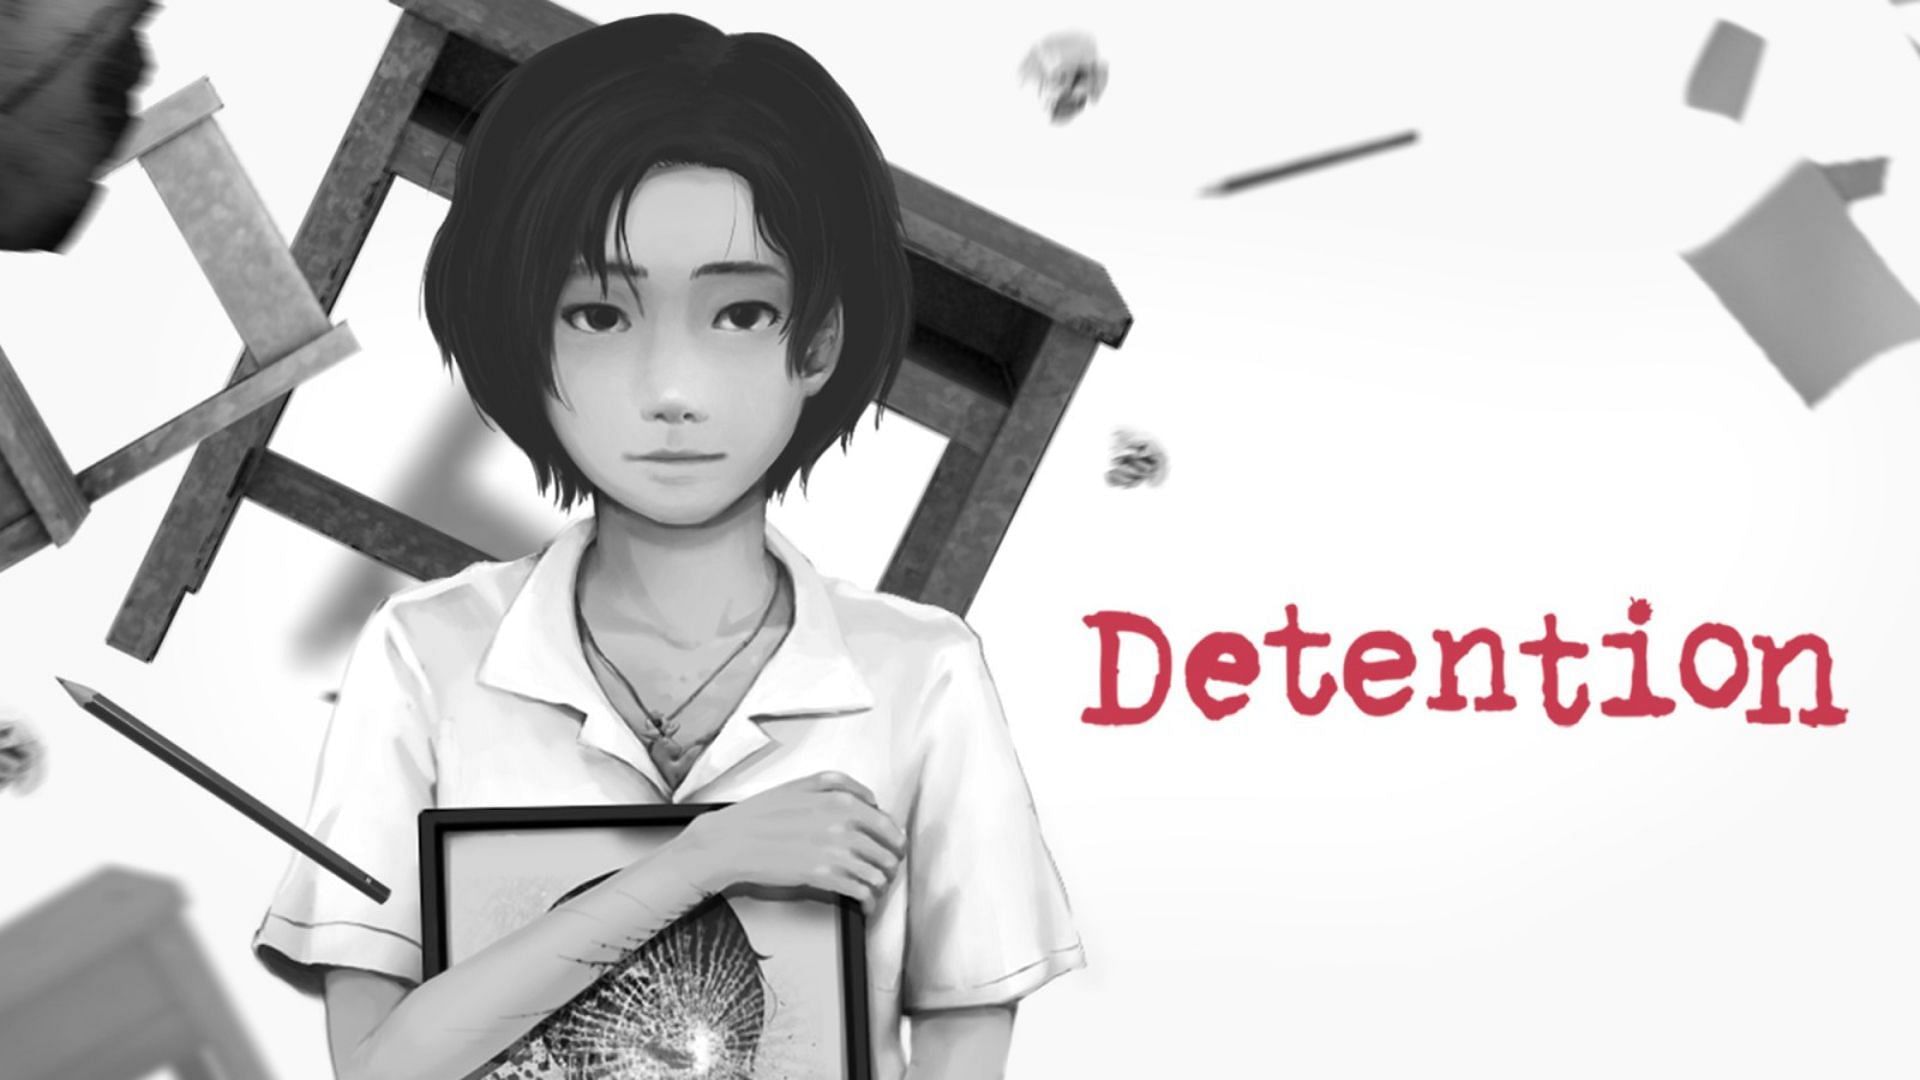 Detention (Image via Steam)